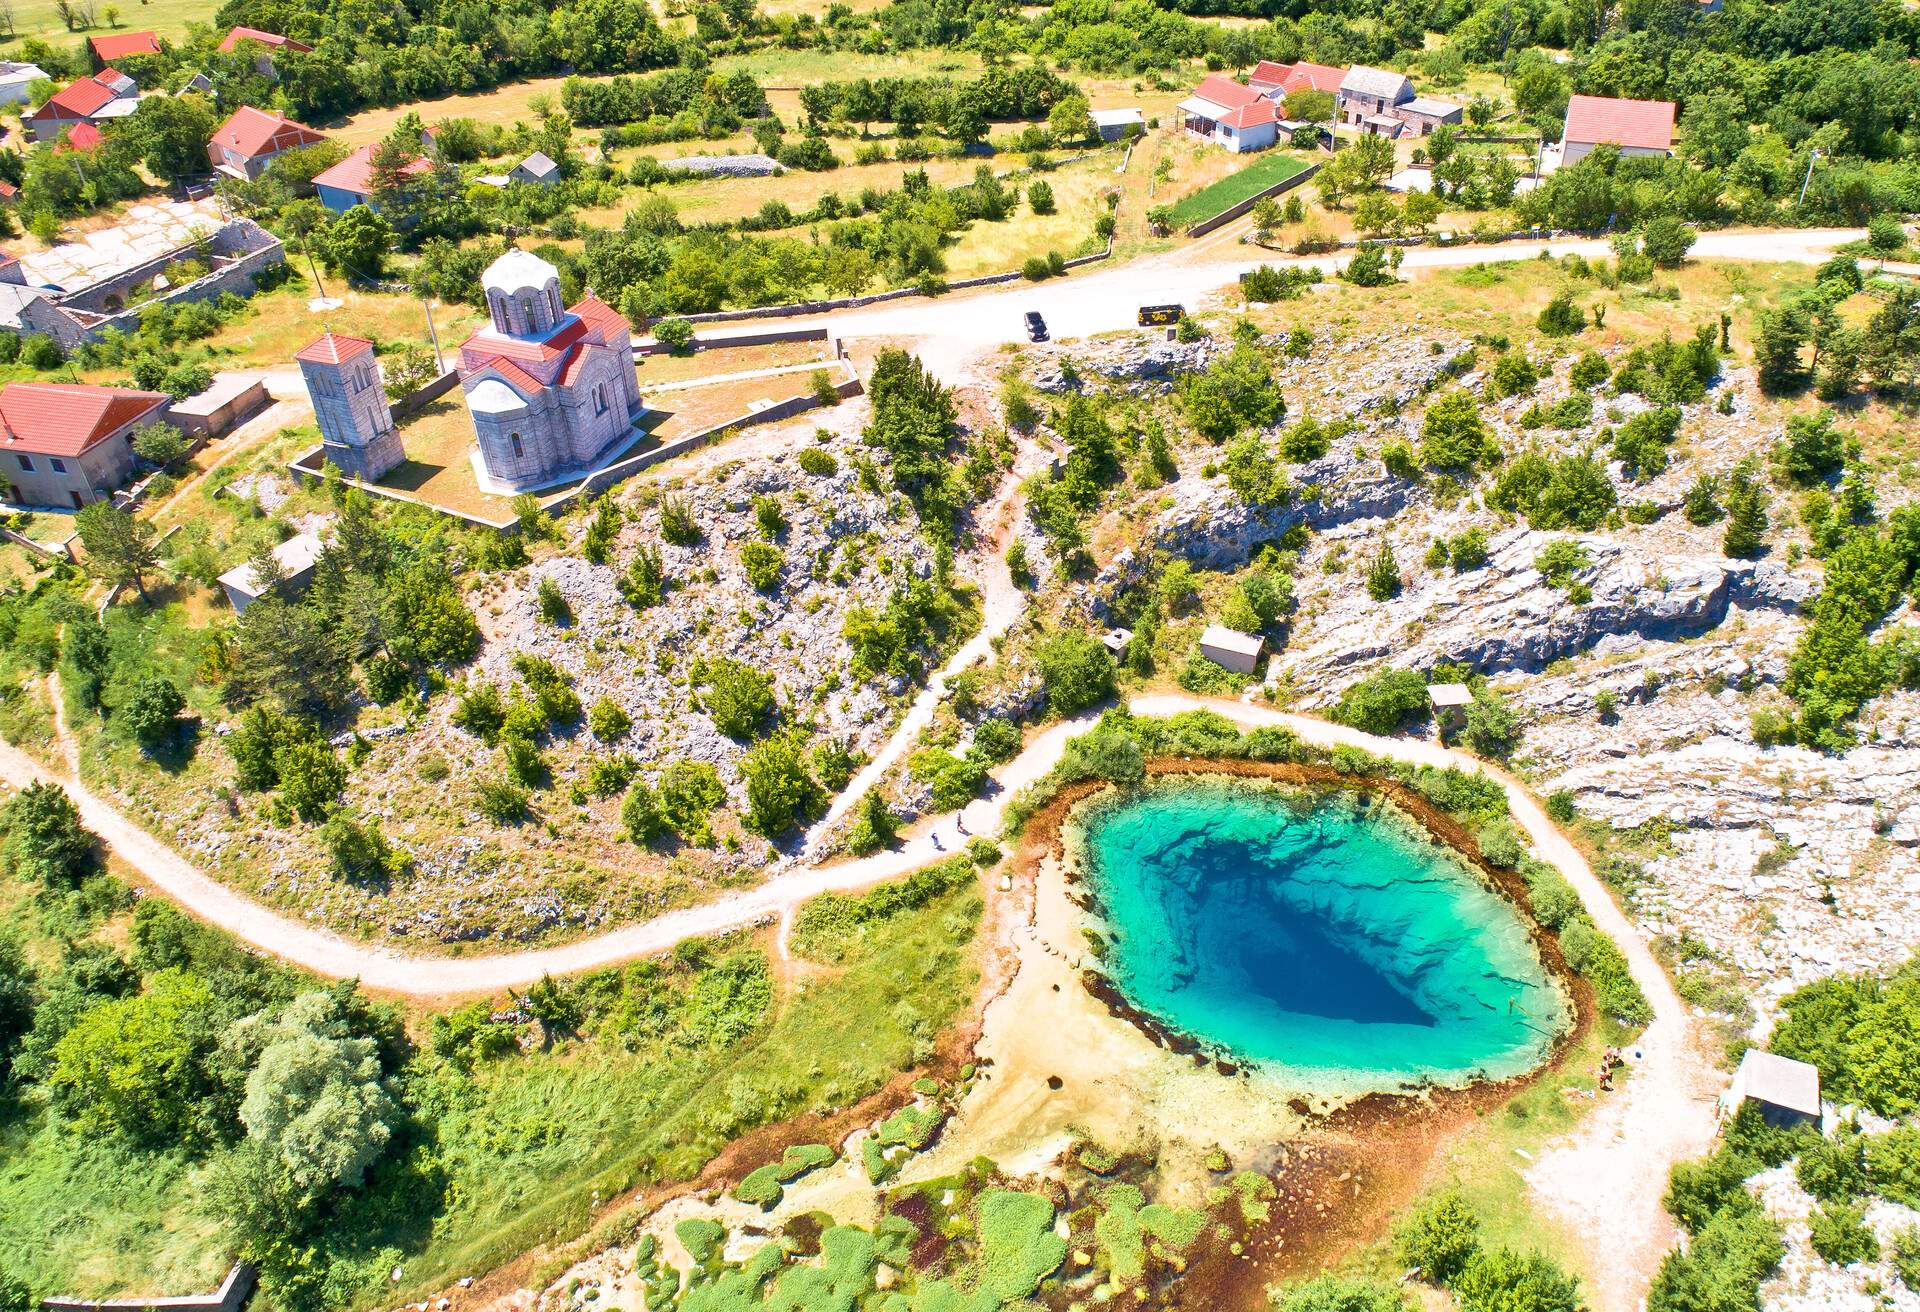 Cetina river source water hole and Orthodox church aerial view, Dalmatian Zagora region of Croatia